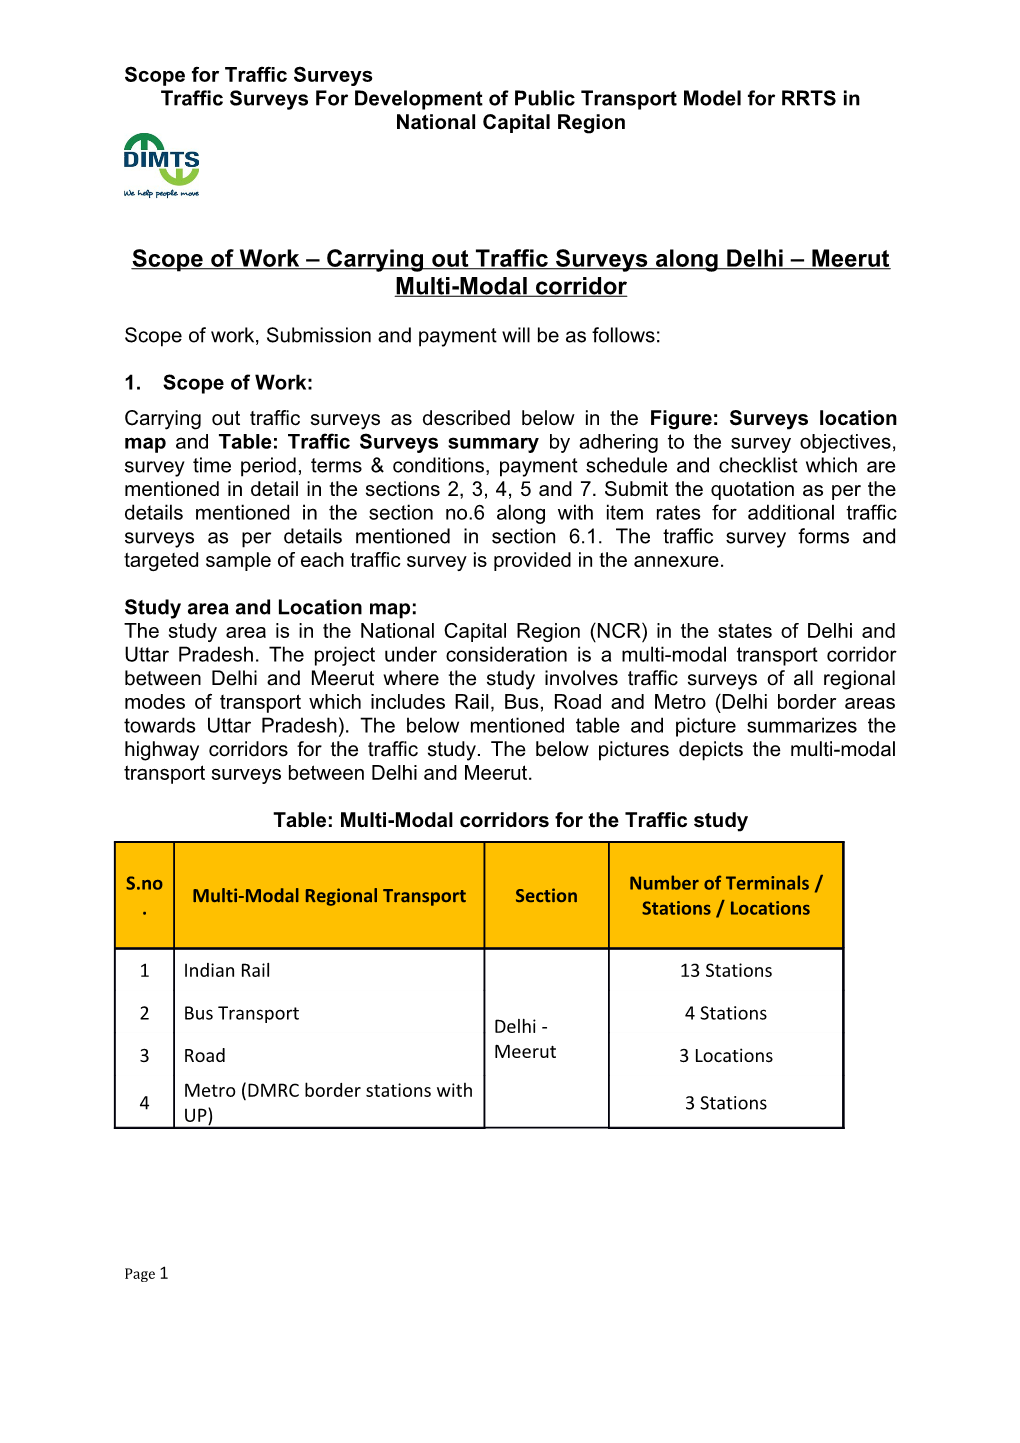 Scope of Work Carrying out Traffic Surveys Along Delhi Meerut Multi-Modal Corridor